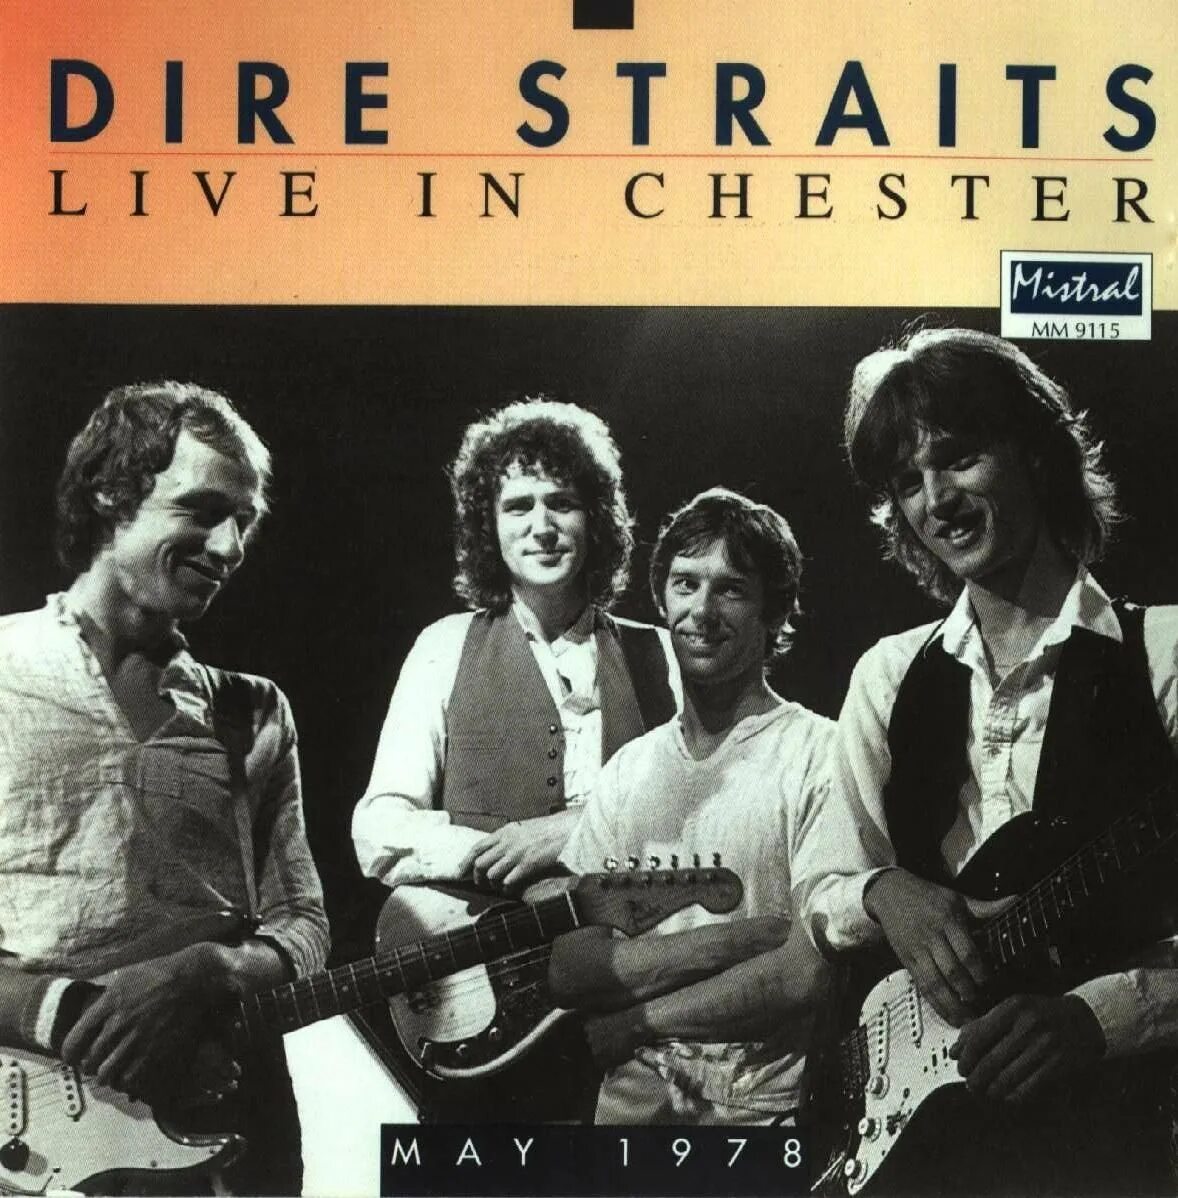 Даер стрейтс. Группа dire Straits. Dire Straits фото. Группа dire Straits 1991. Dire Straits 1978.